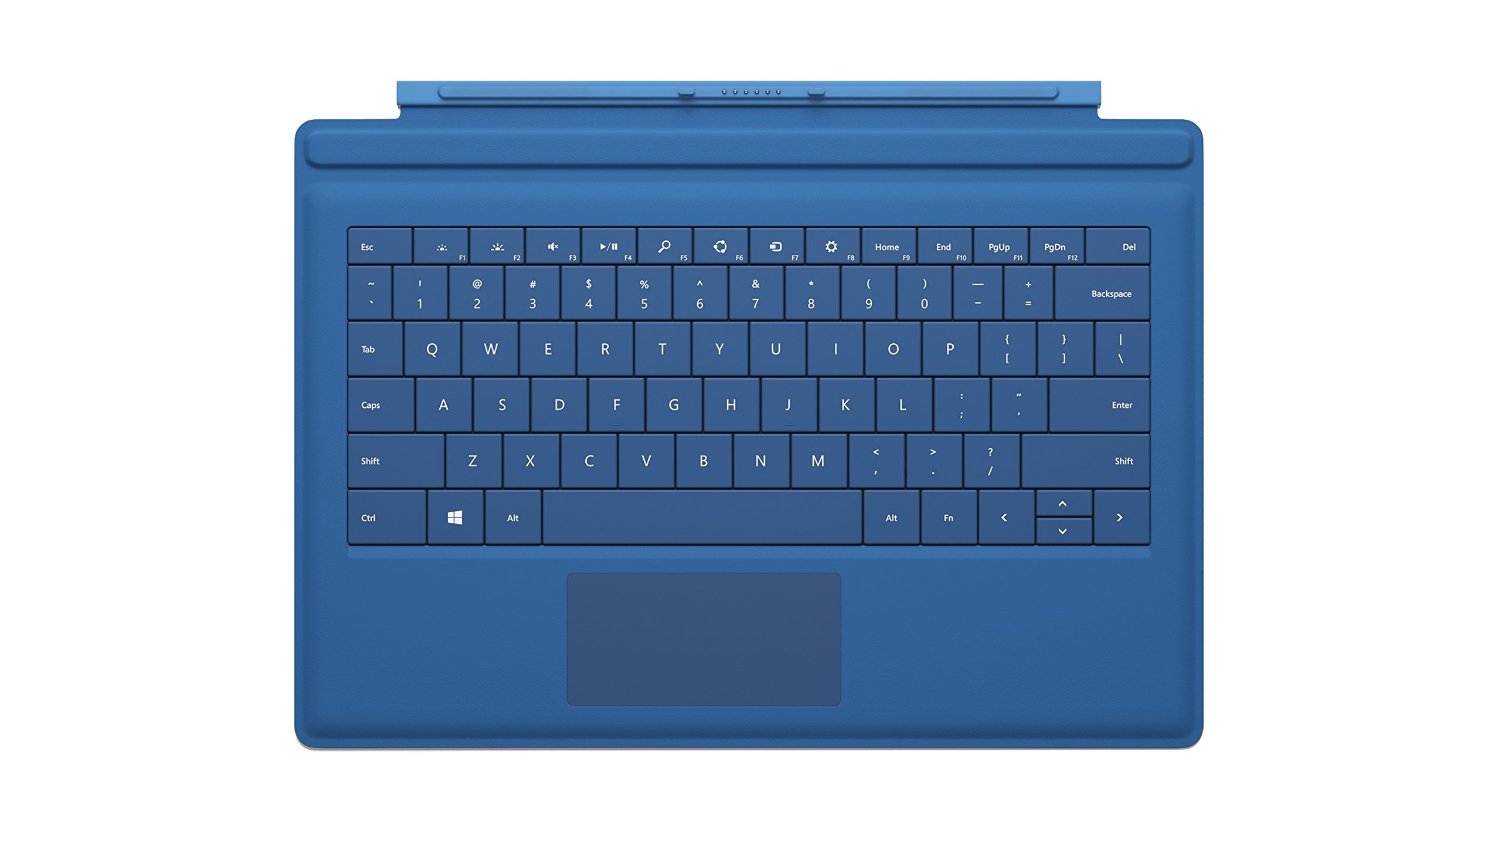 Microsoft Surface Pro 3 Type Cover (Cyan)